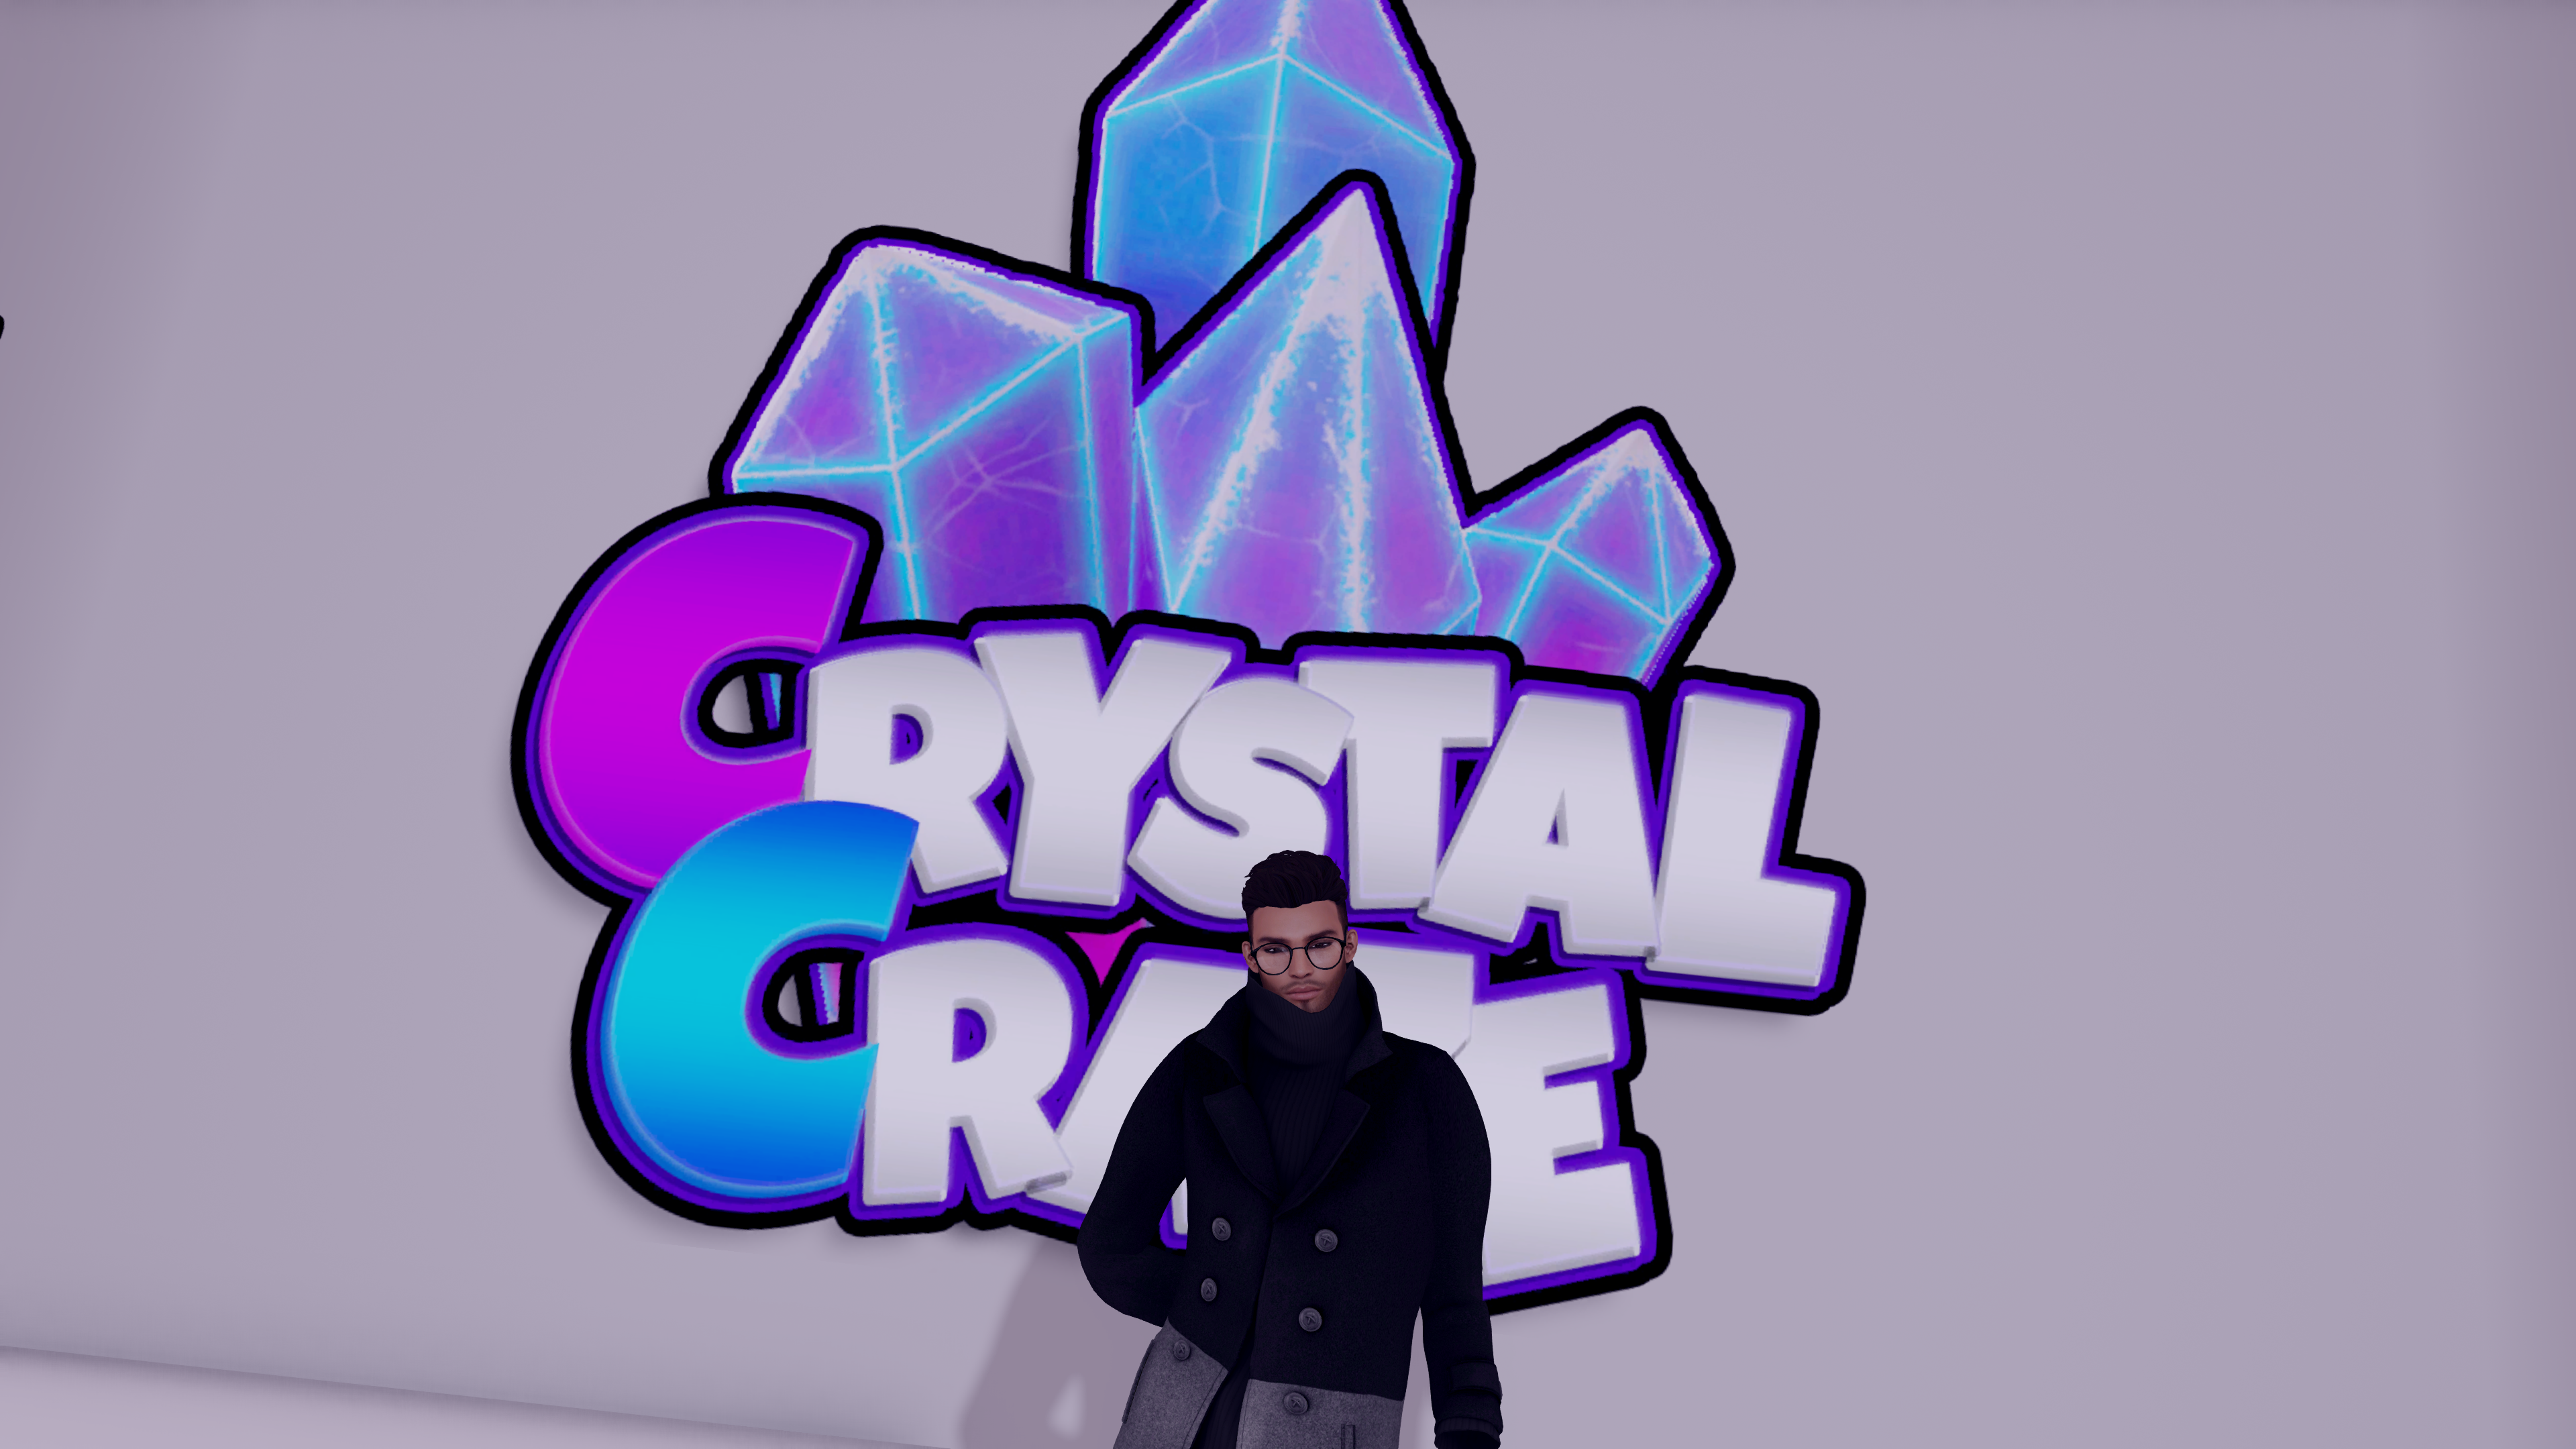 CrystalCraze HQ 01